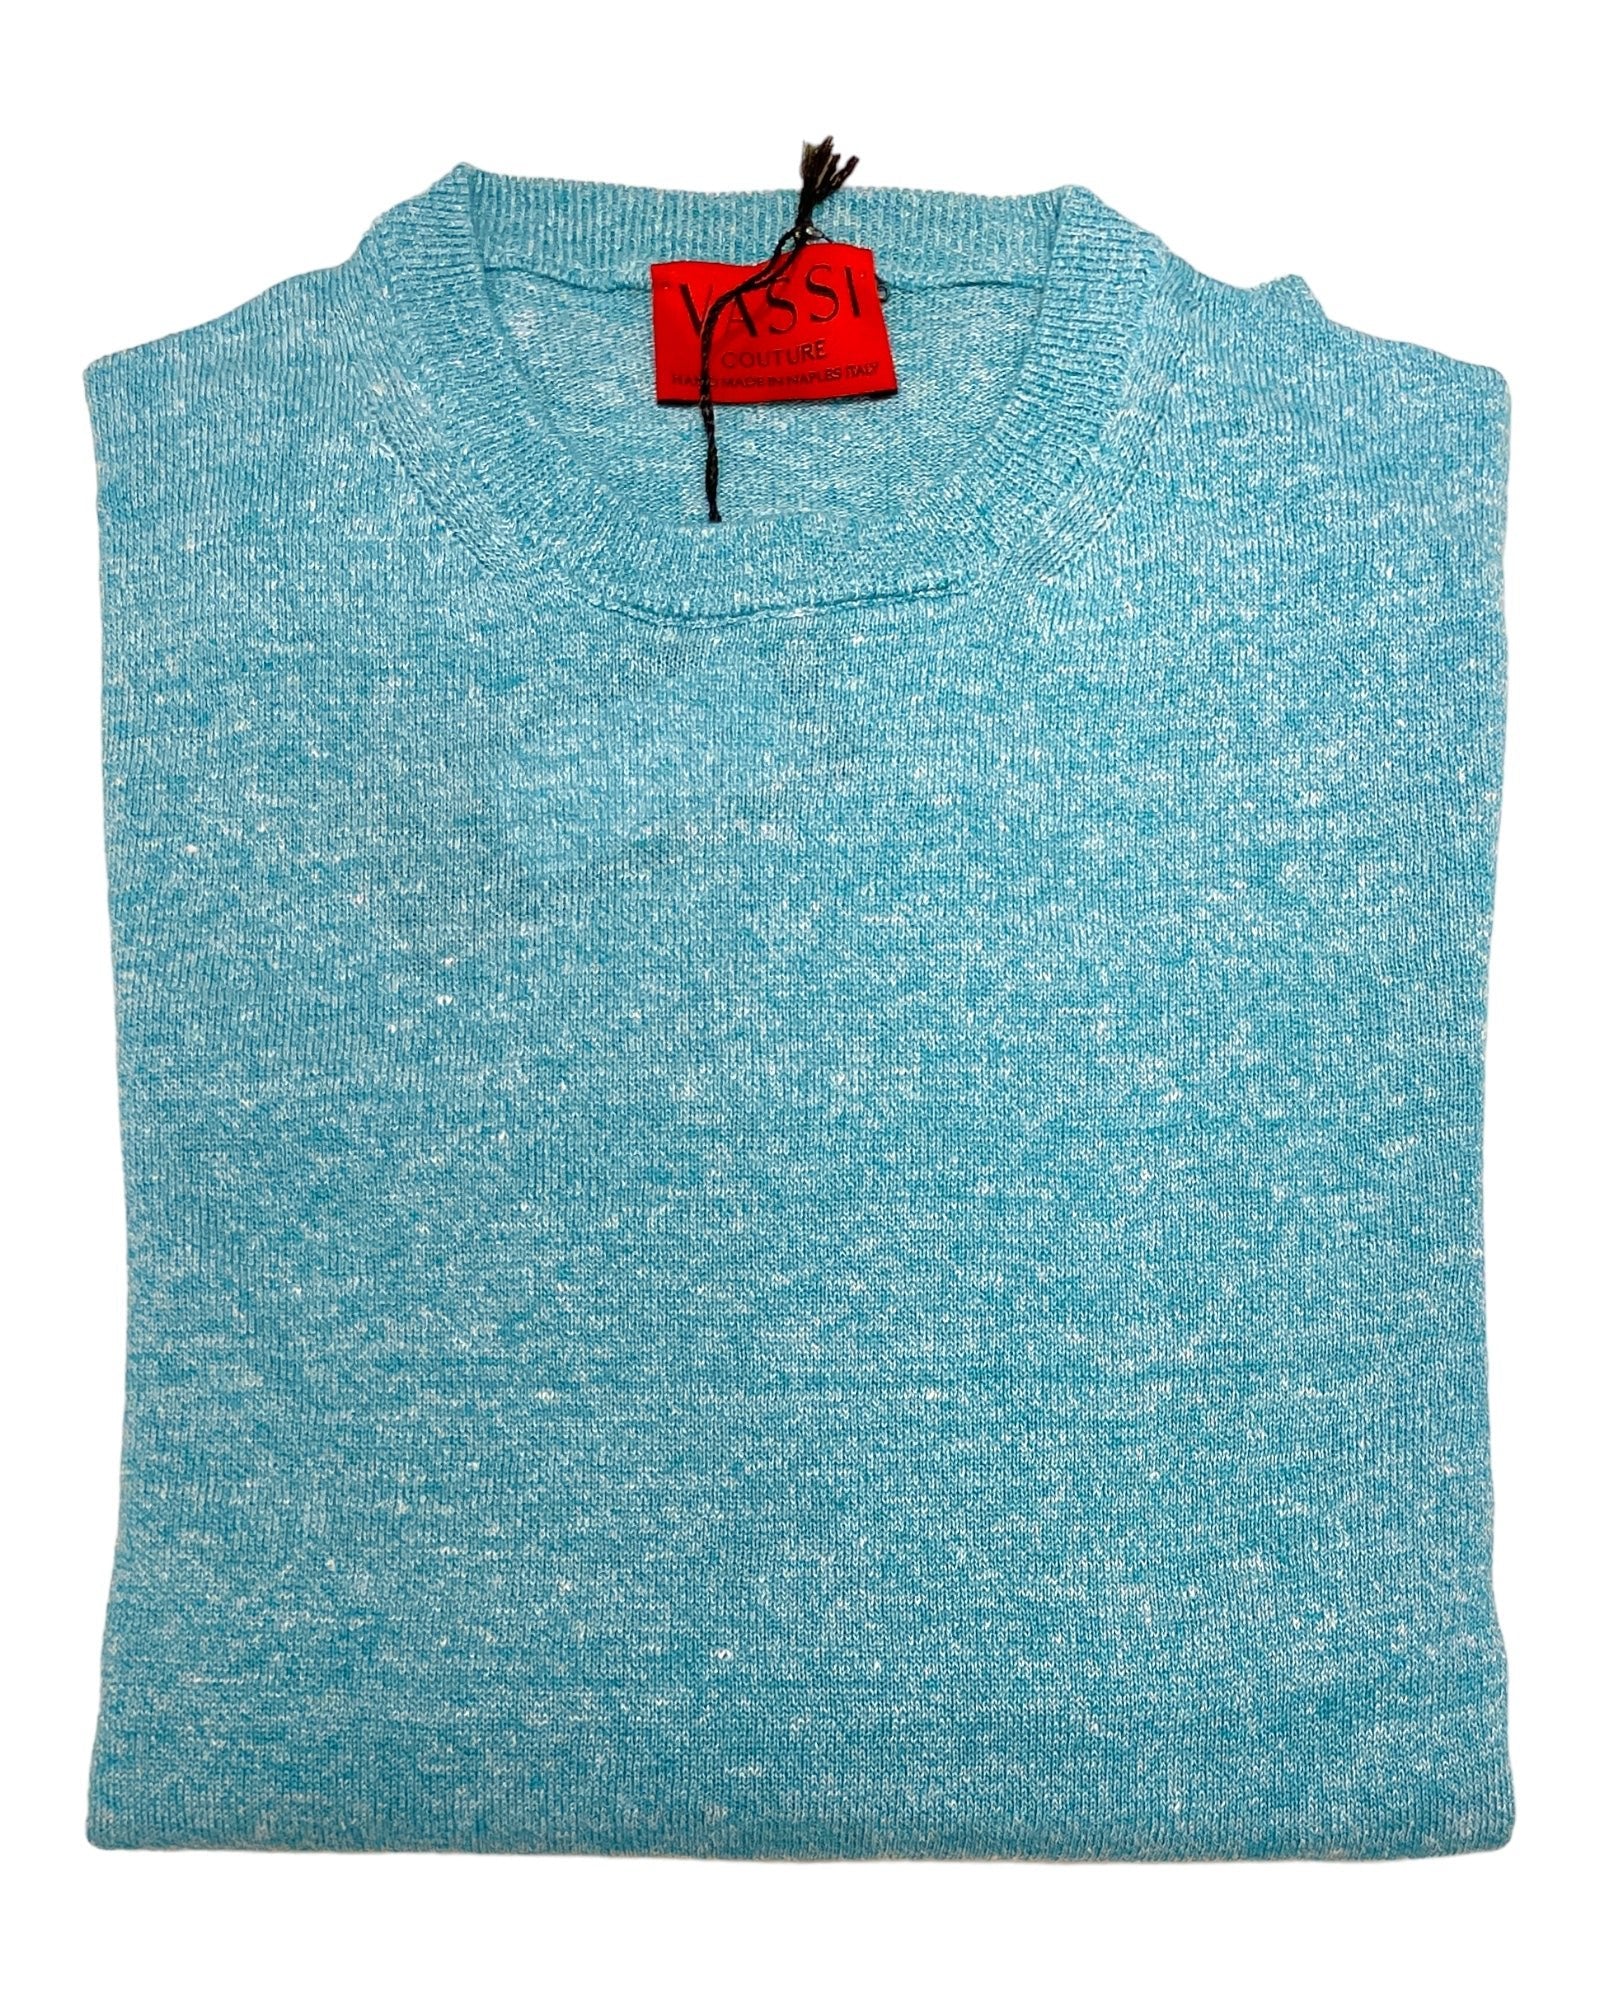 Linen & Cotton T-Shirt - Aqua Melange SWEATERSM